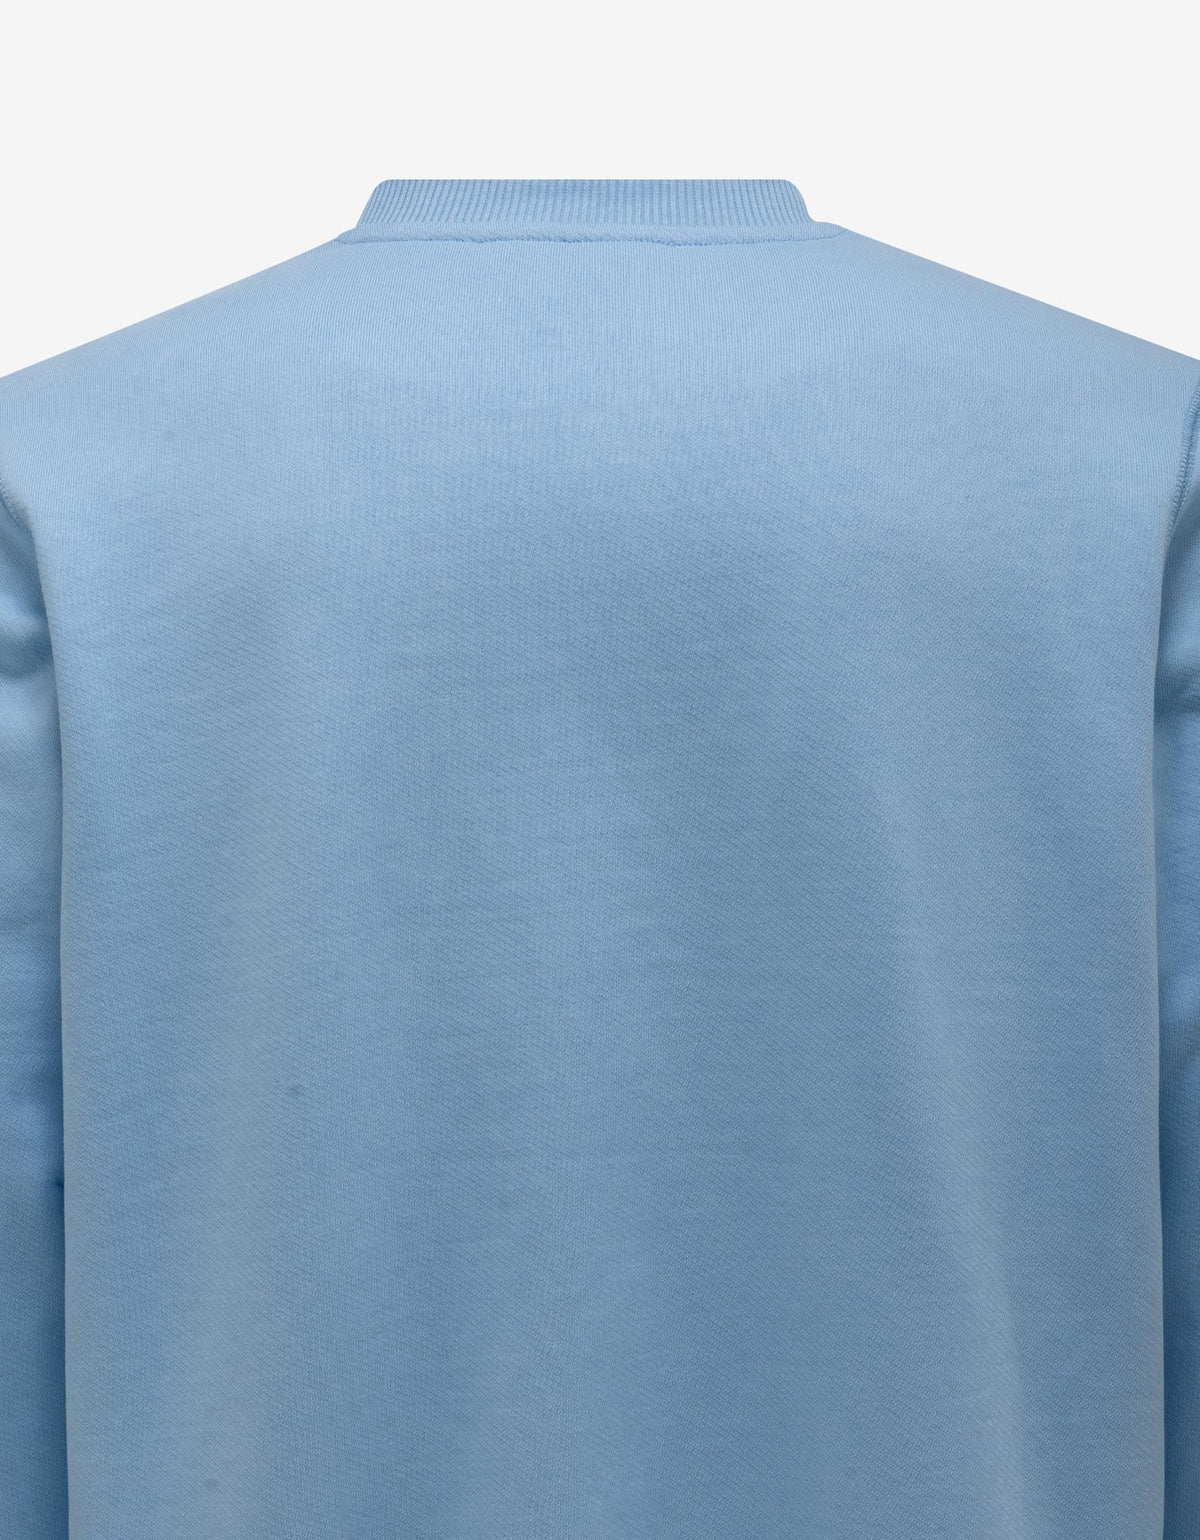 Casablanca Blue Tennis Club Pastelle Print Sweatshirt